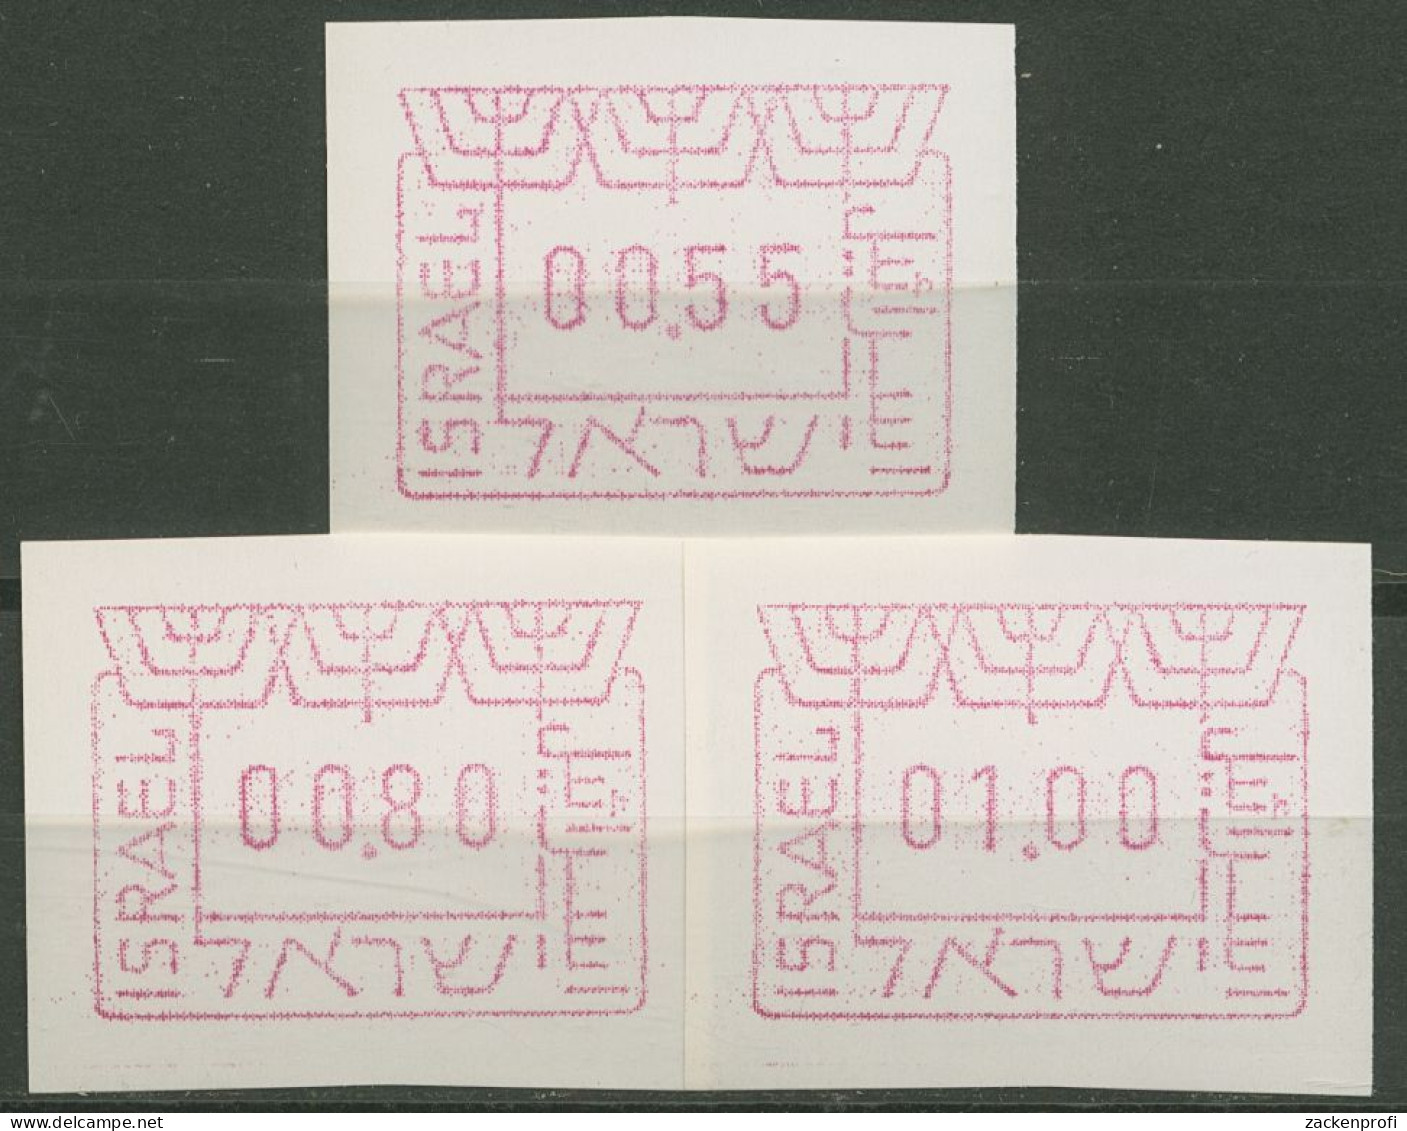 Israel ATM 1988 ATM-Satz 3 Werte 0,55/0,80/1,00, ATM 1 D S4 Postfrisch - Vignettes D'affranchissement (Frama)